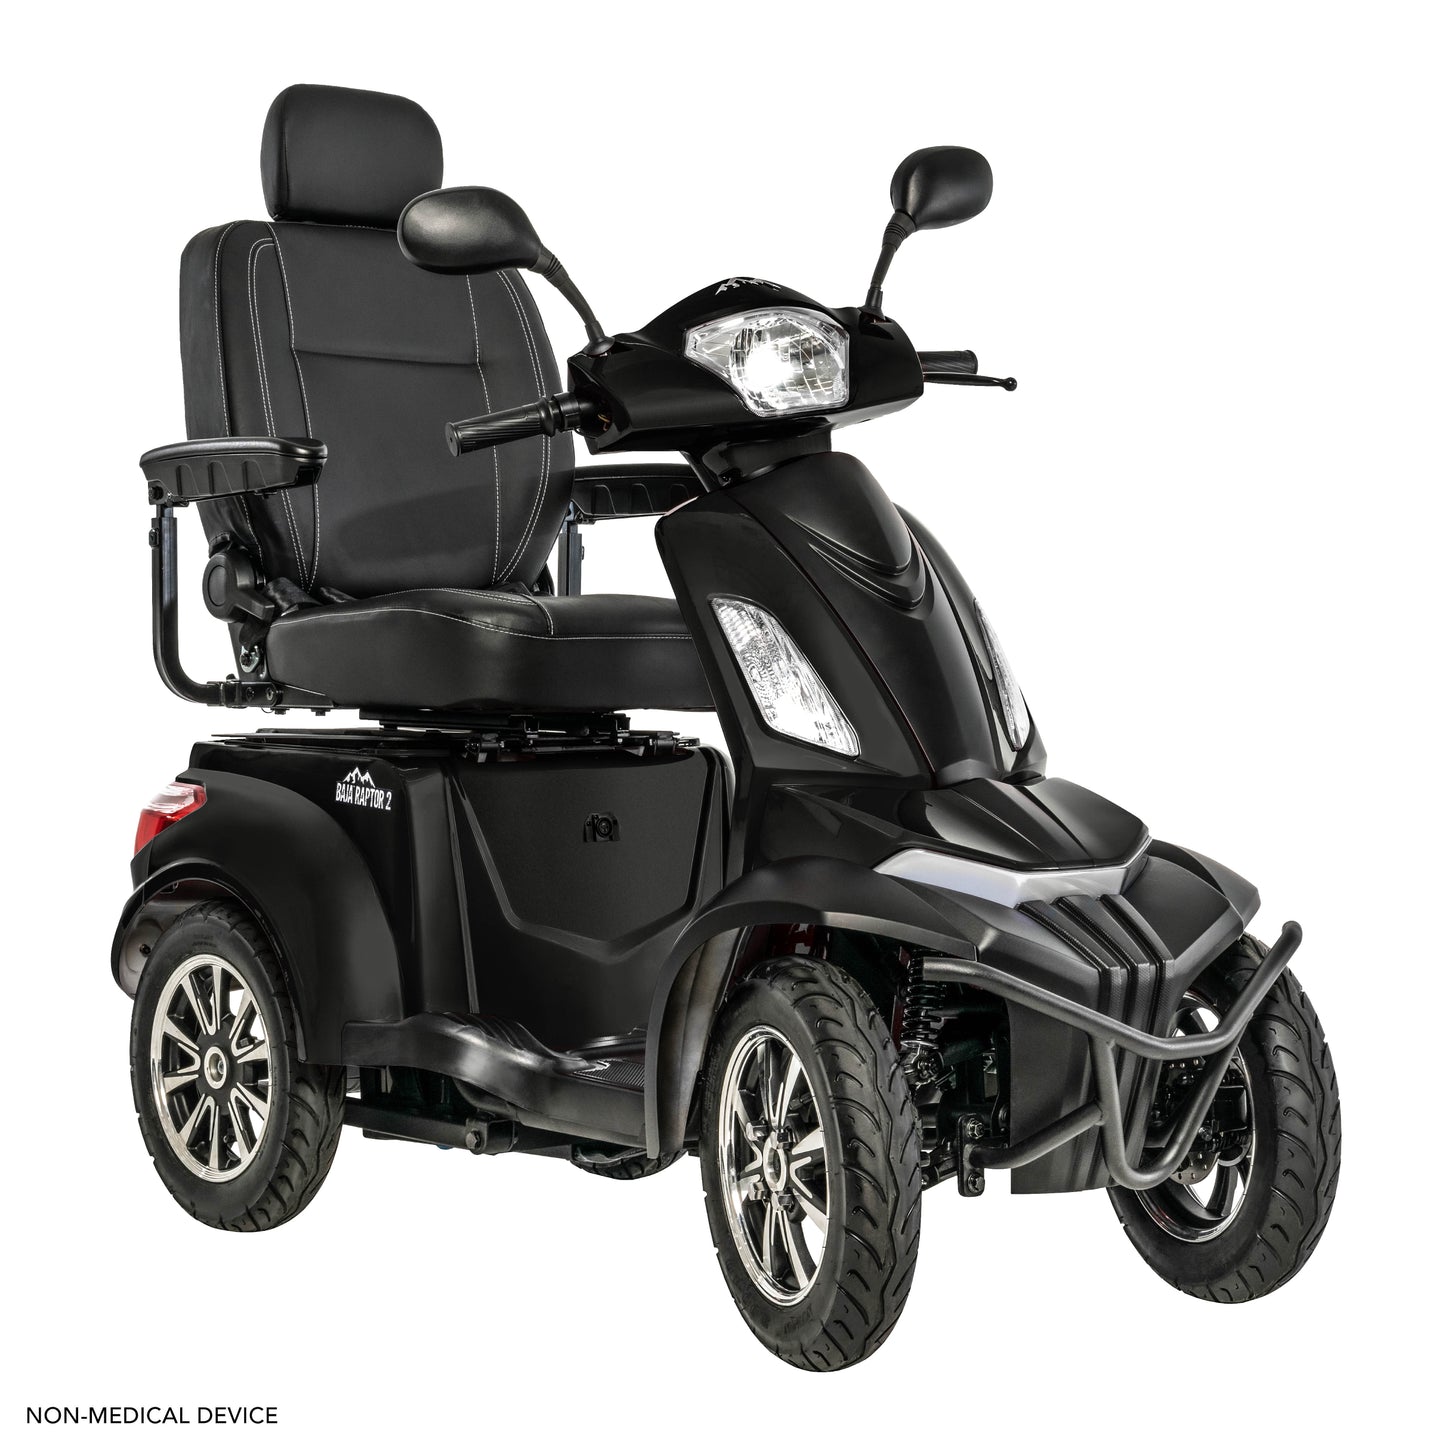 BAJA® Raptor 2 4-Wheel Mobility Scooter